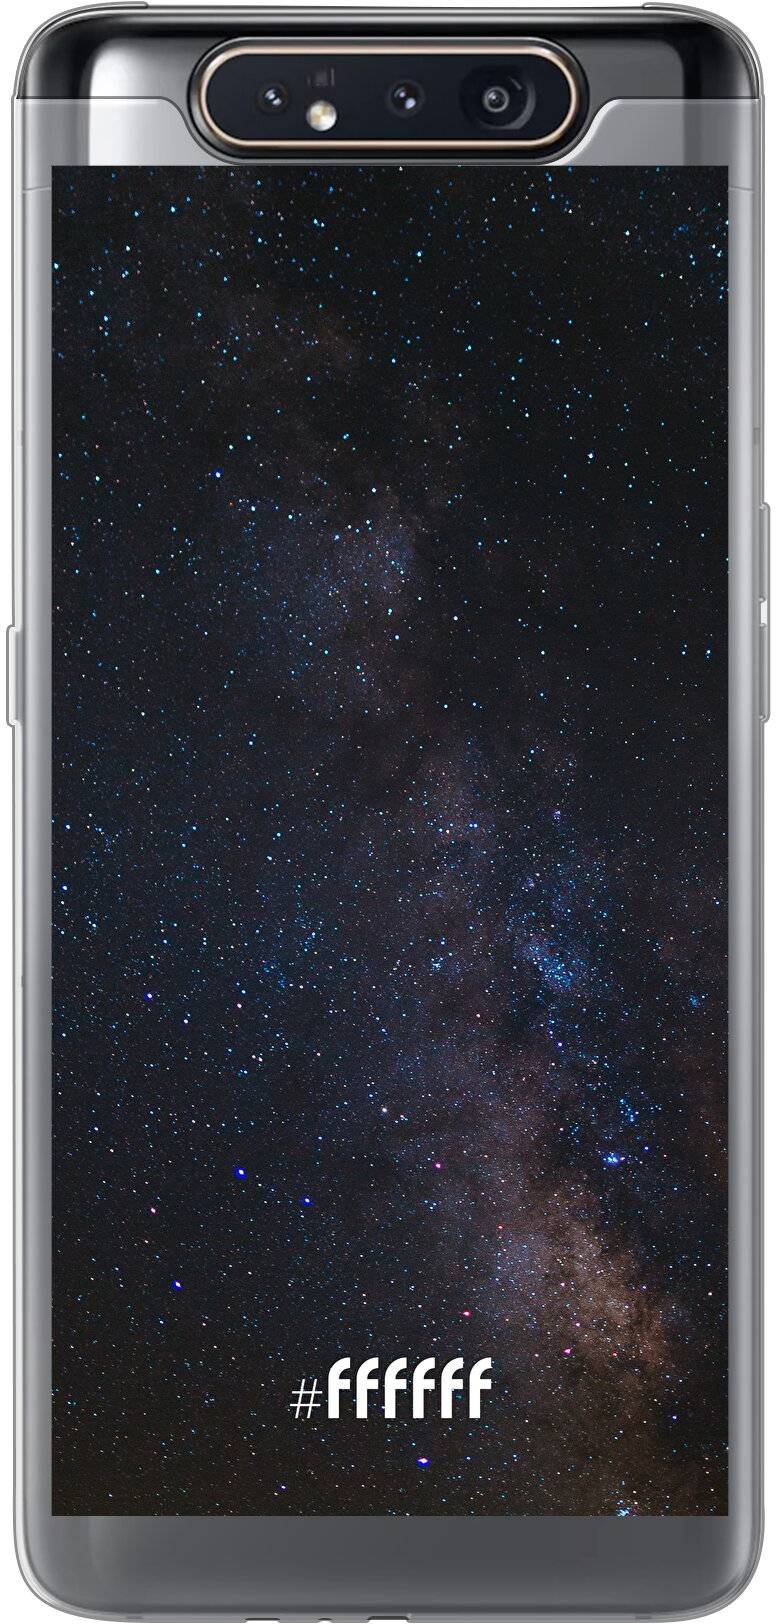 Dark Space Galaxy A80